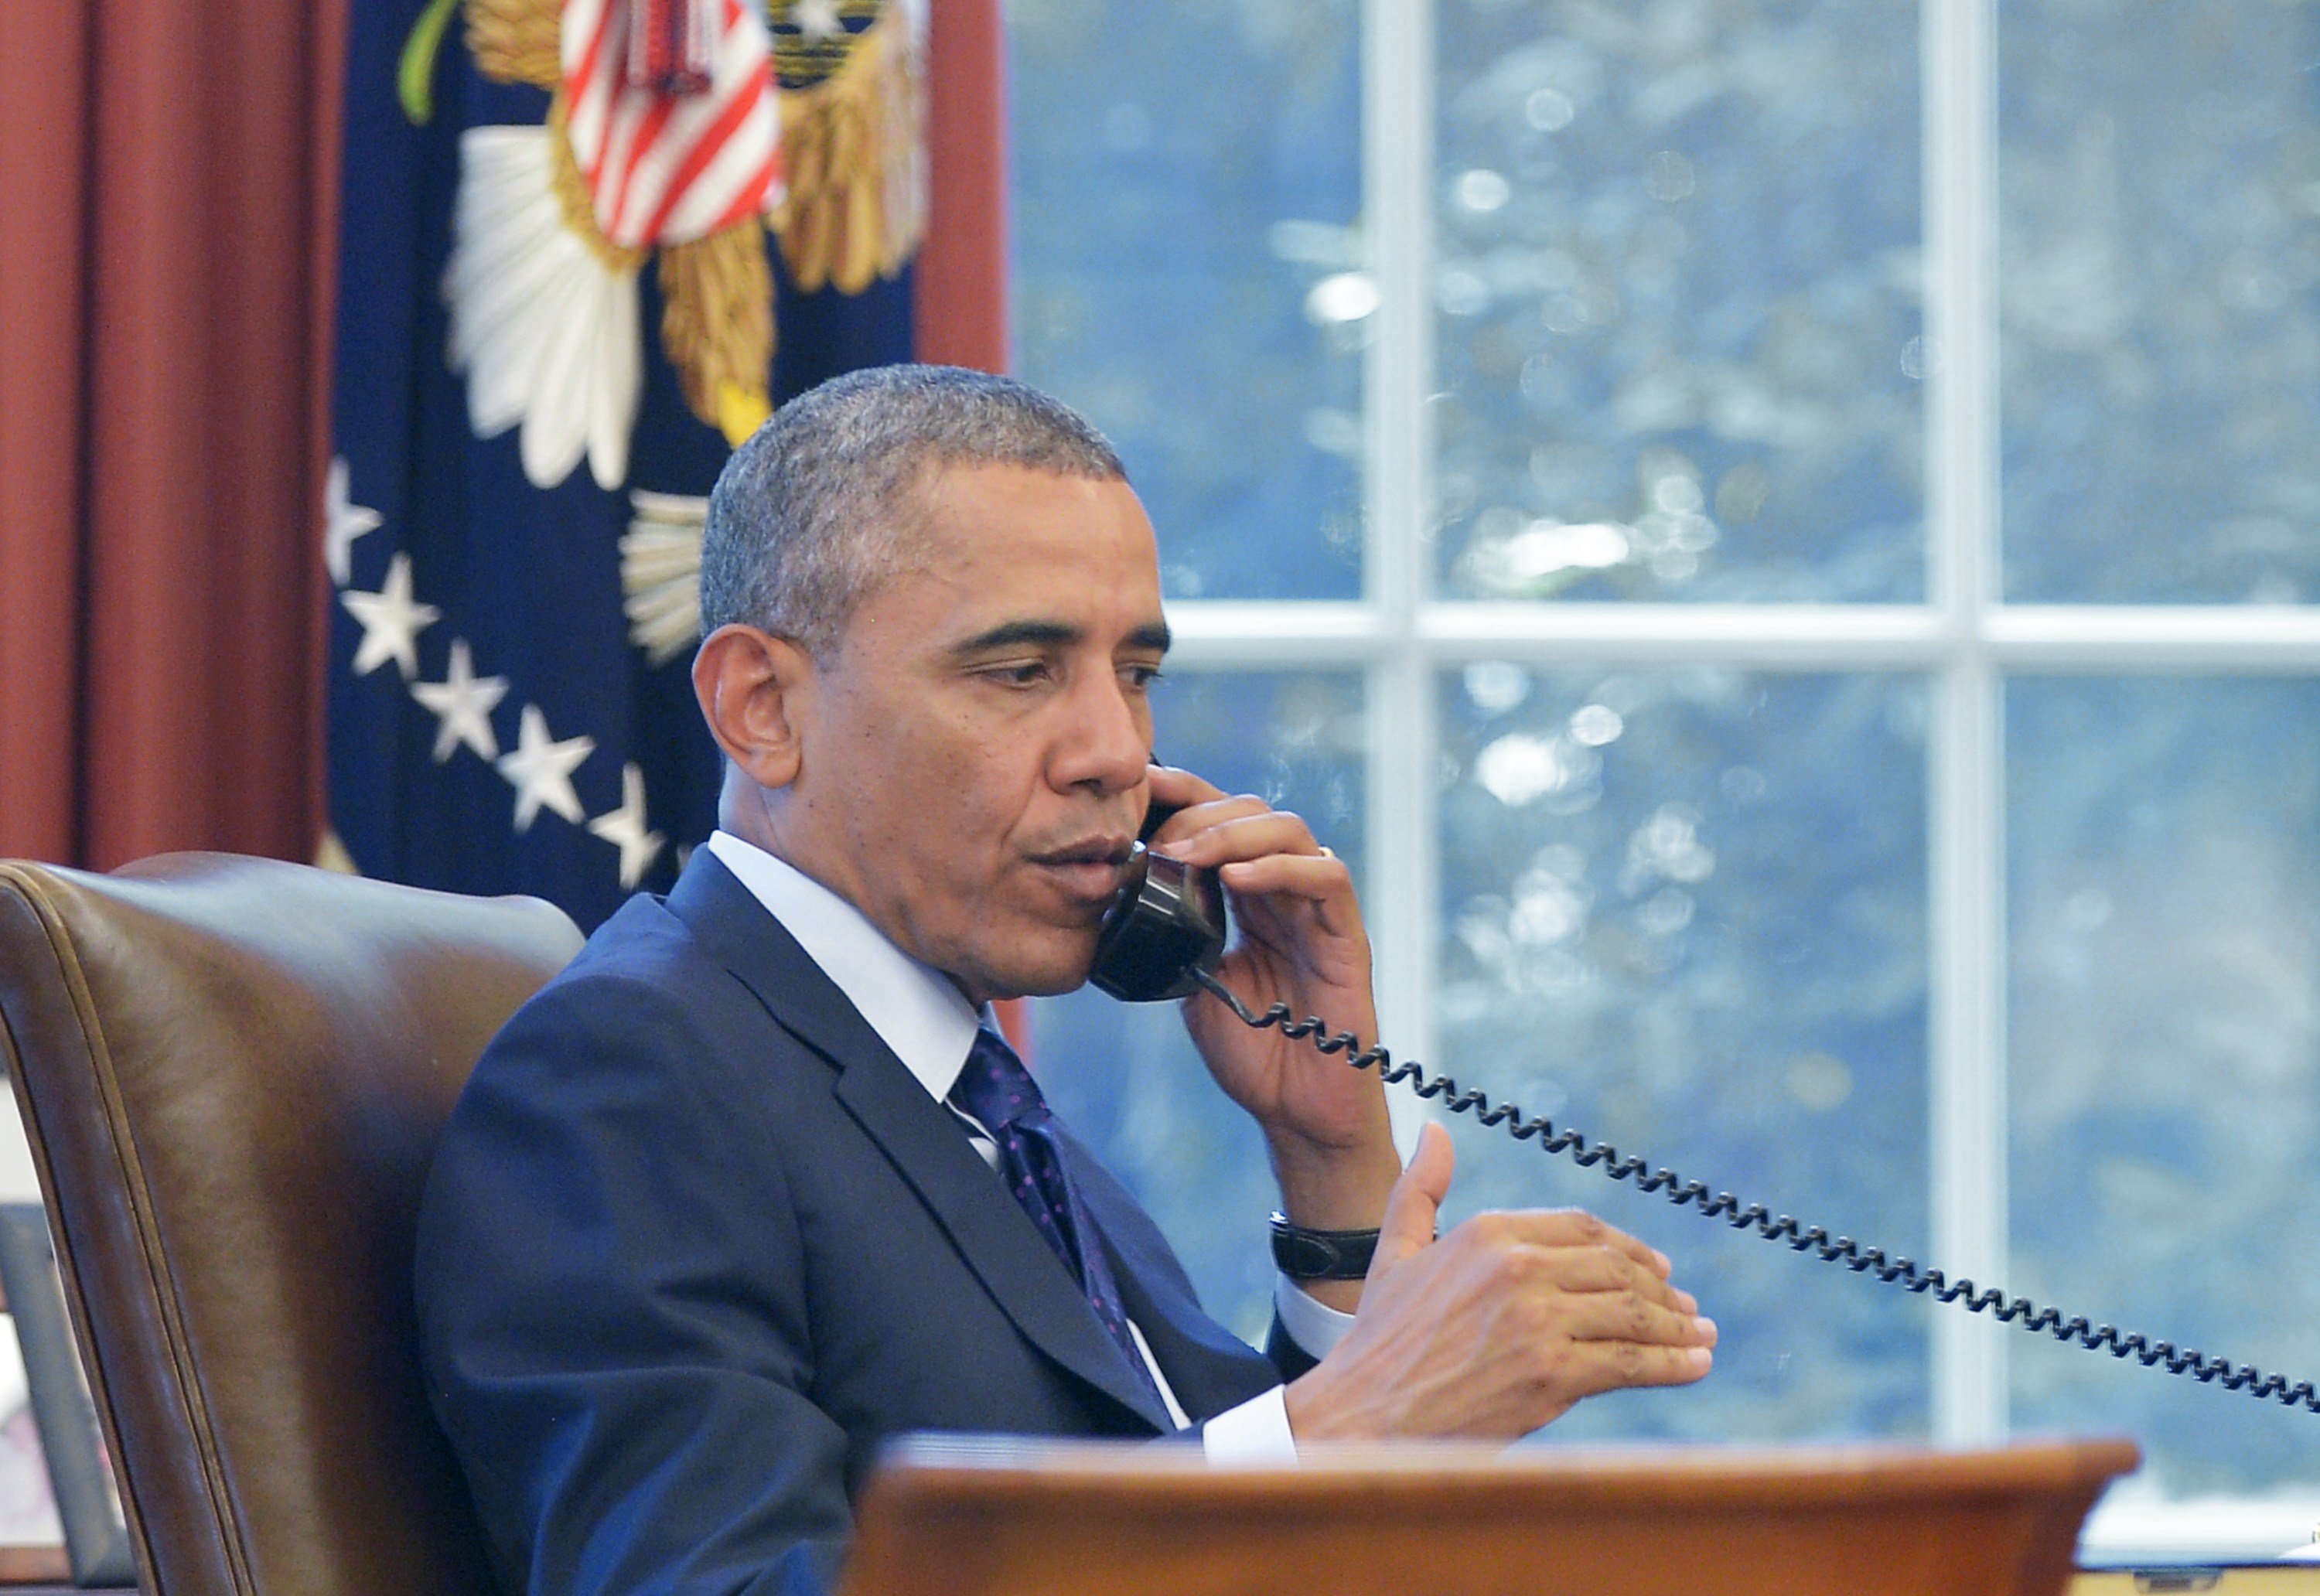 Analysis Of Obama S Phone Calls Reflect Escalating World Crises Cbs News